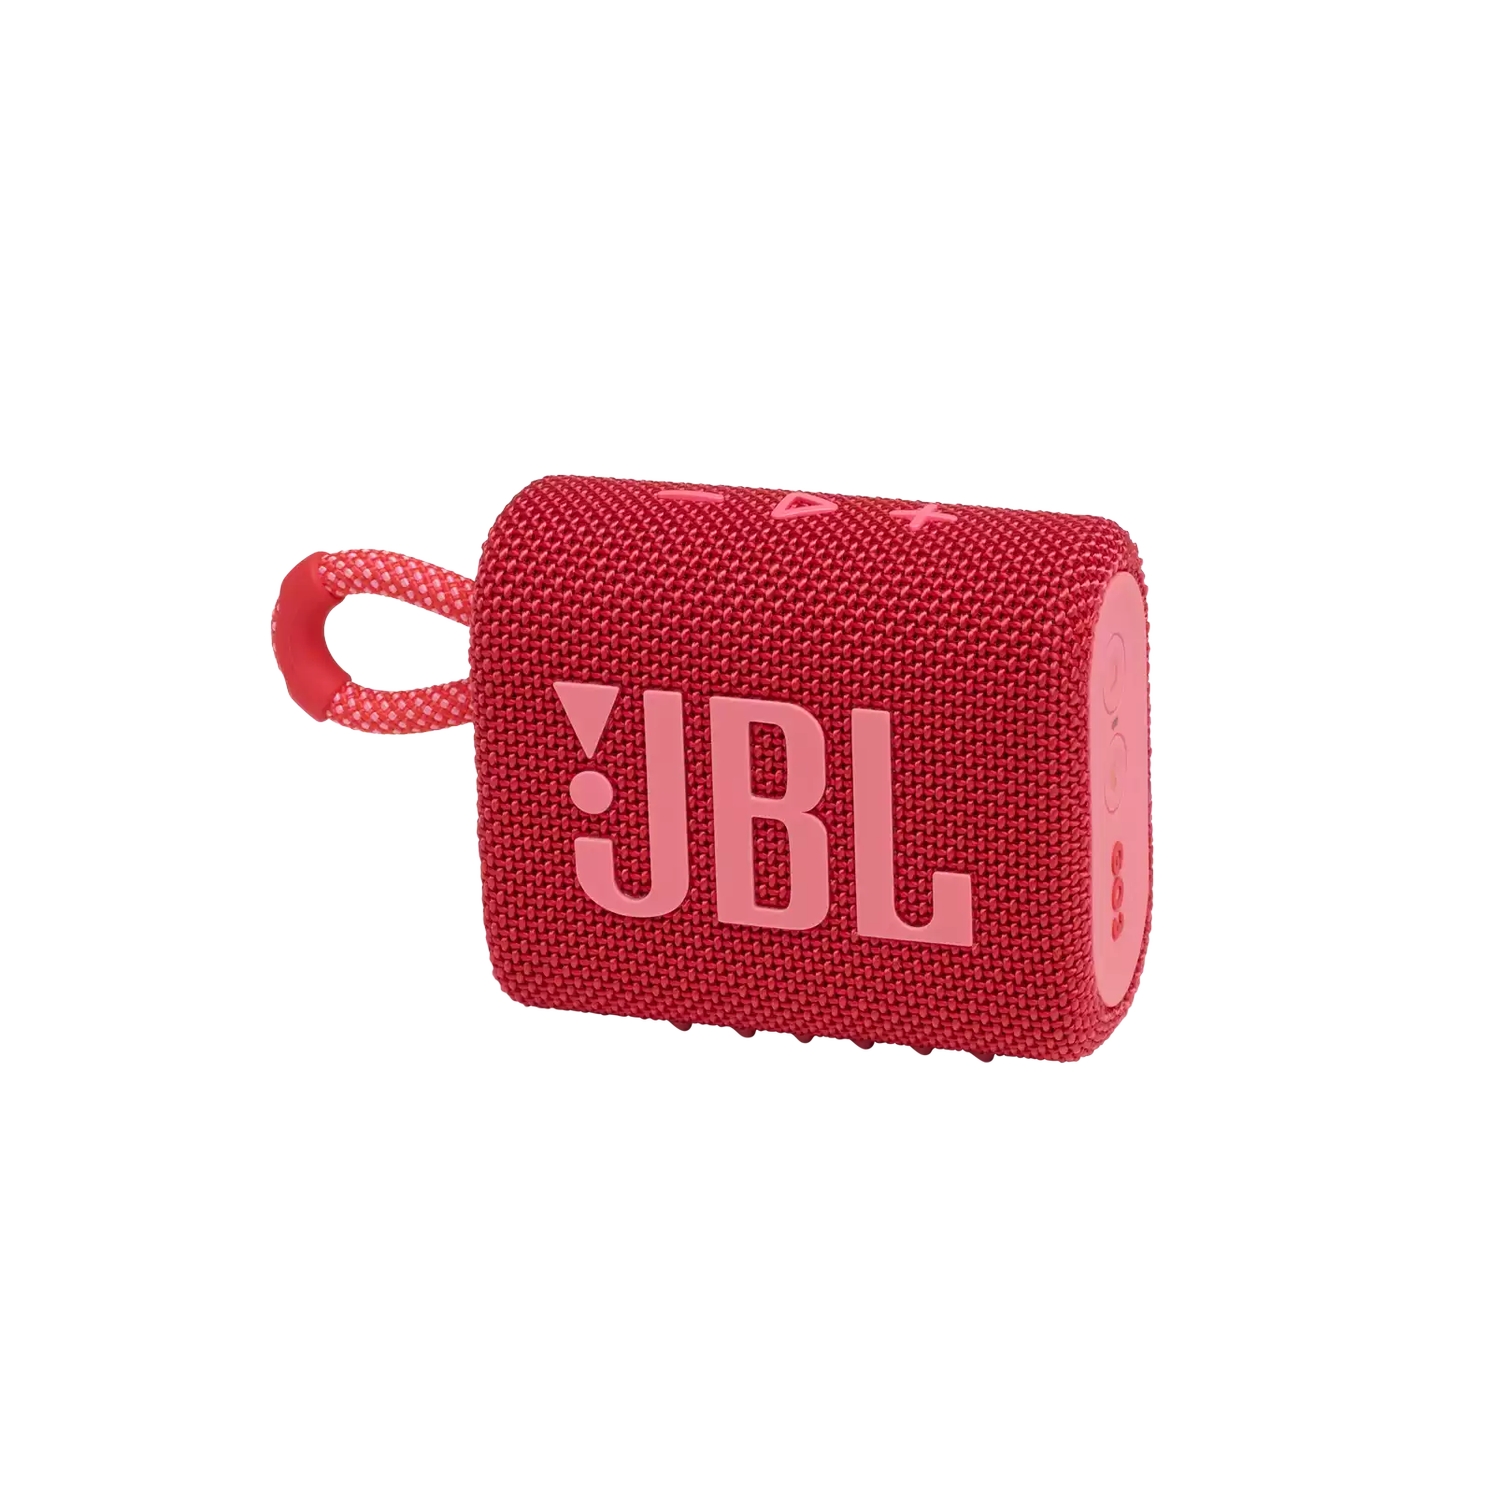 Портативная акустика JBL GO 3 красная портативная акустика jbl go 3 бирюзовая